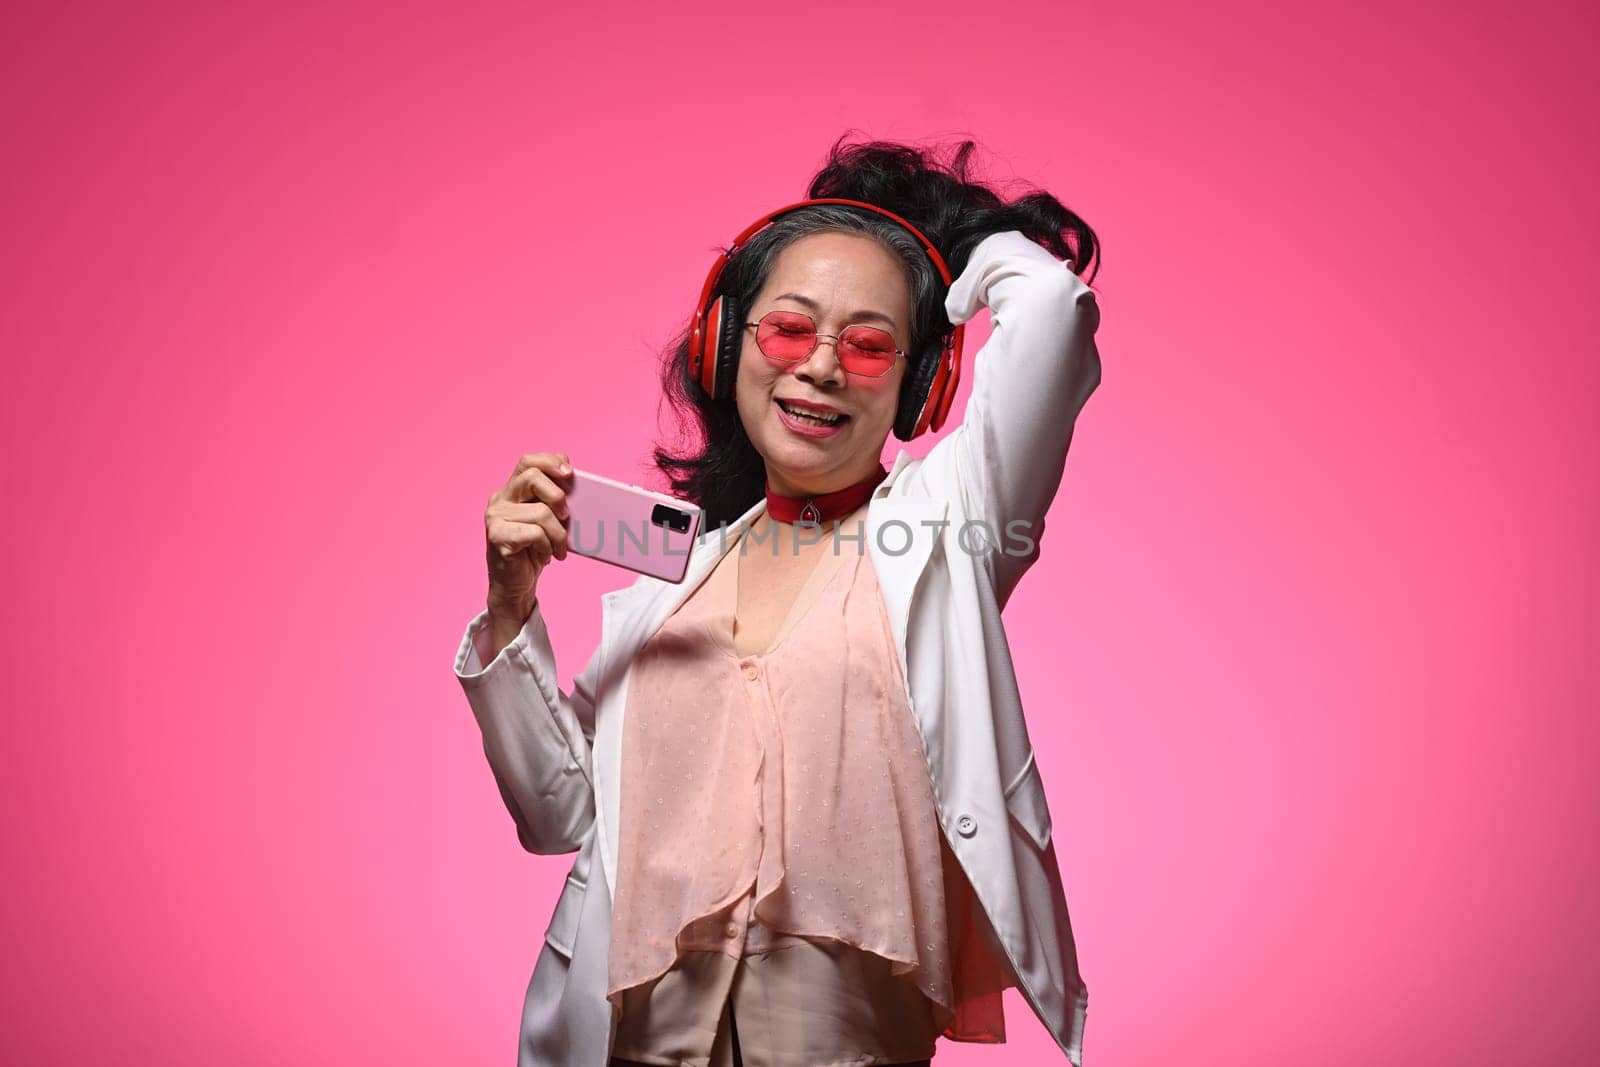 Cheerful elderly woman with headphones enjoying music dancing over pink background.